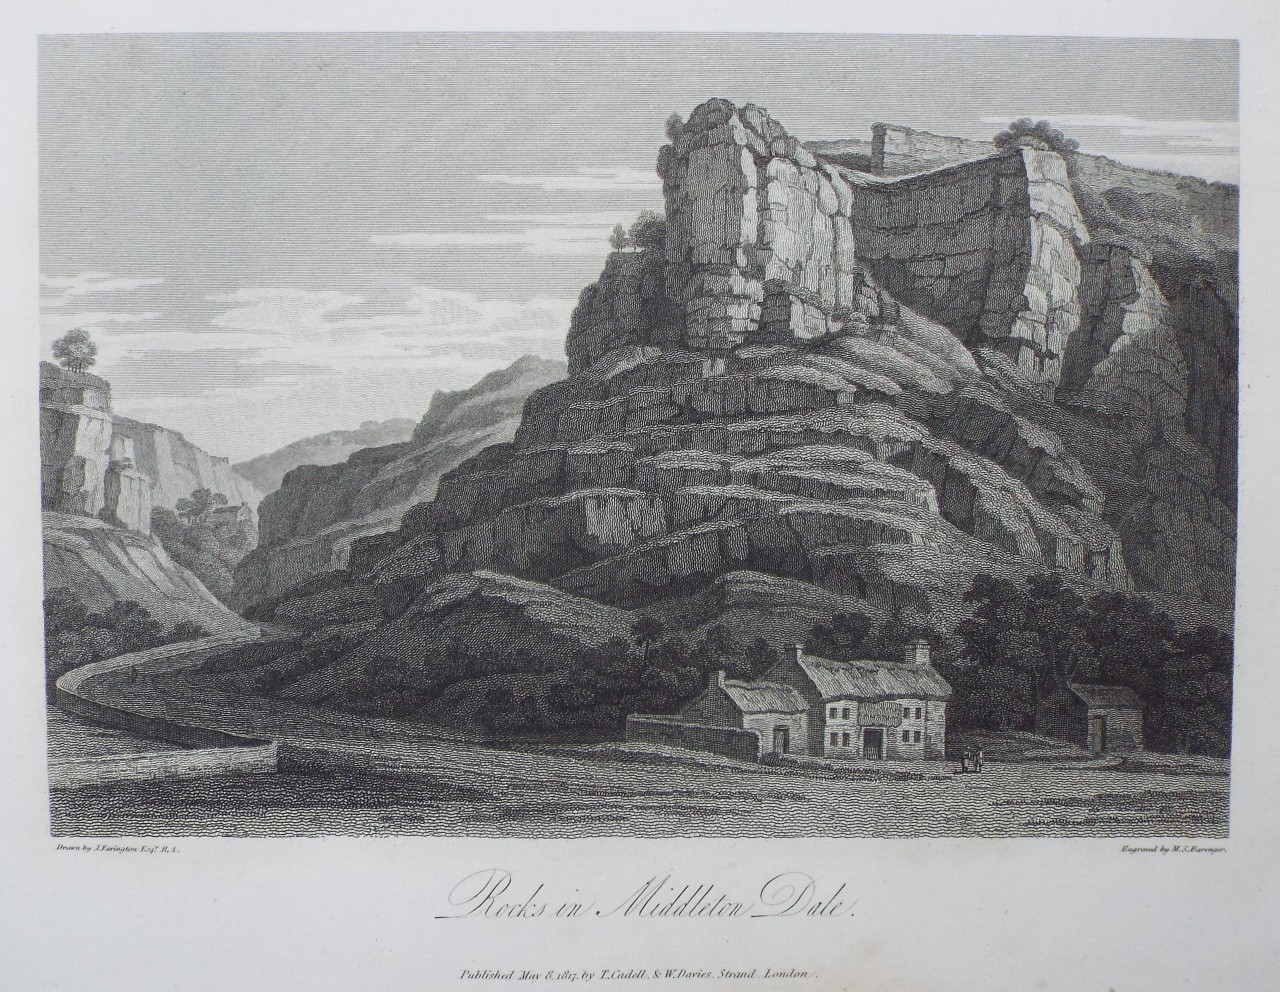 Print - Rocks in Middleton Dale. - Berenger